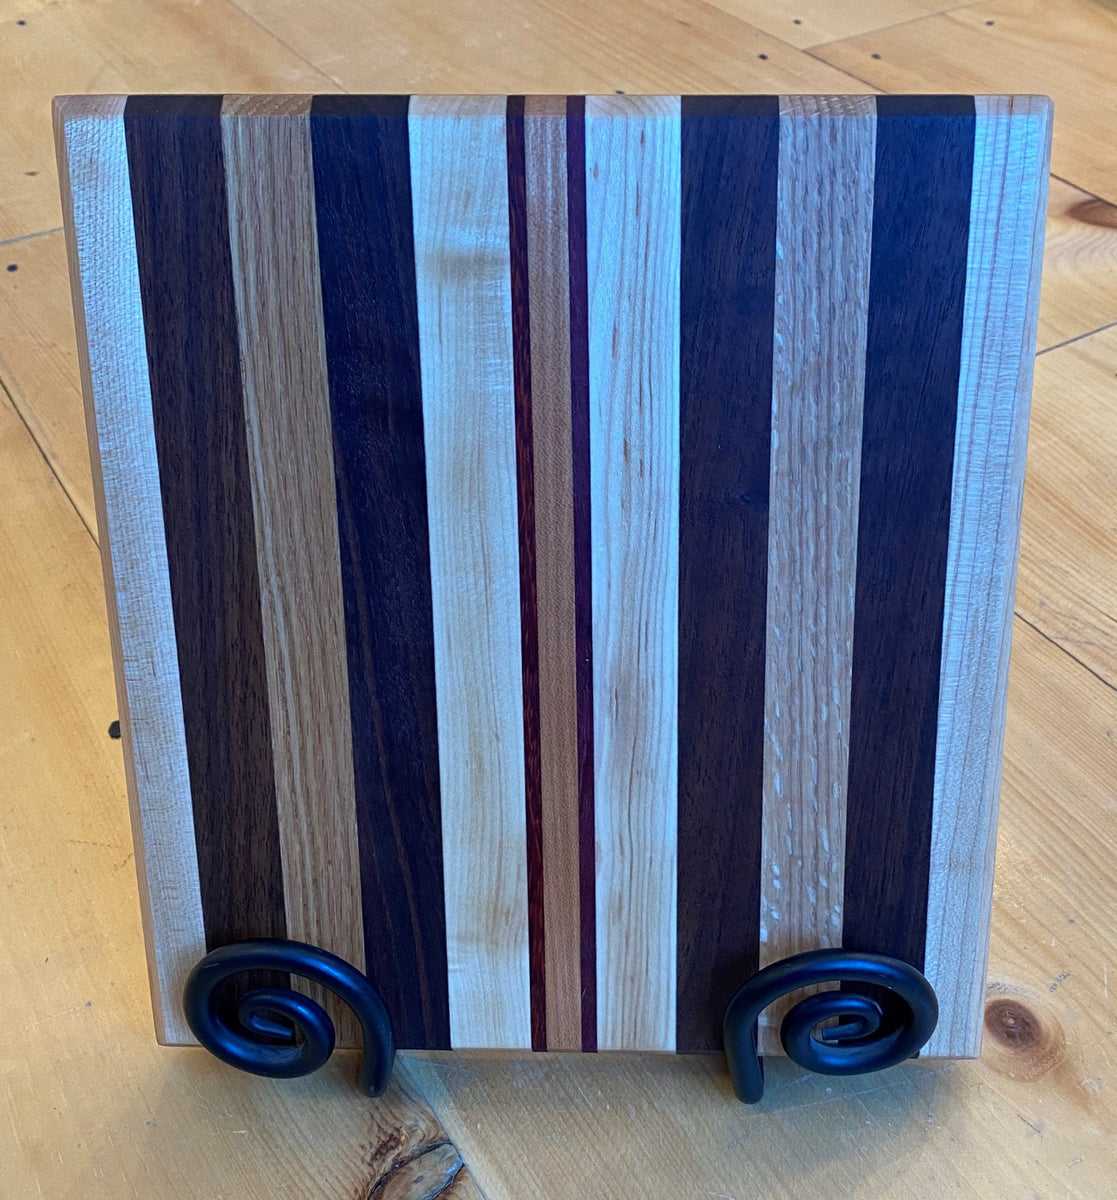 Quarantine Kitchen Maple Cutting Board – The Warped Board